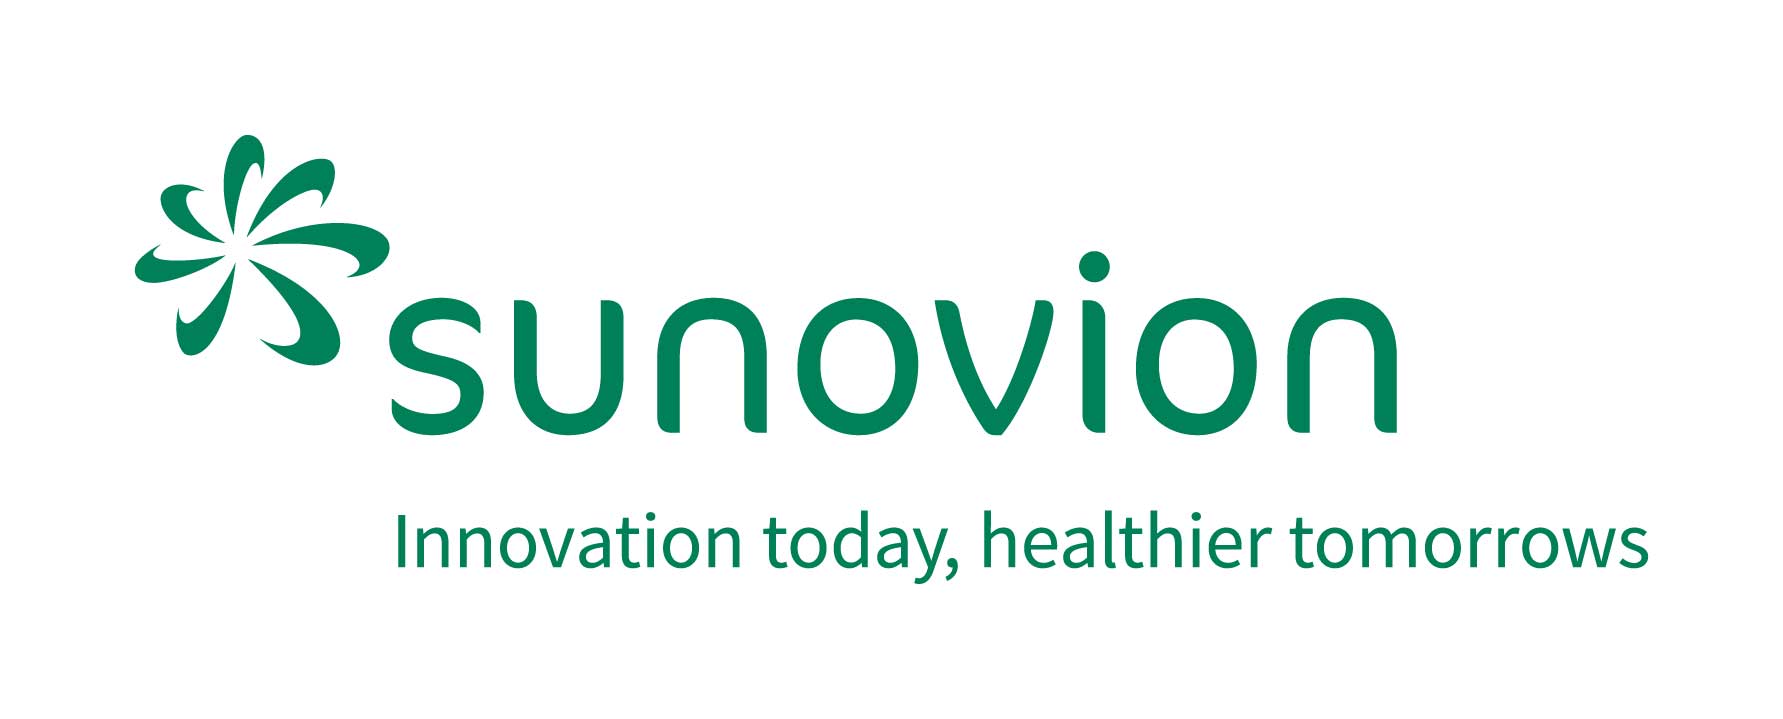 Sunovion Logo - Sunovion logo including Tagline | Sunovion